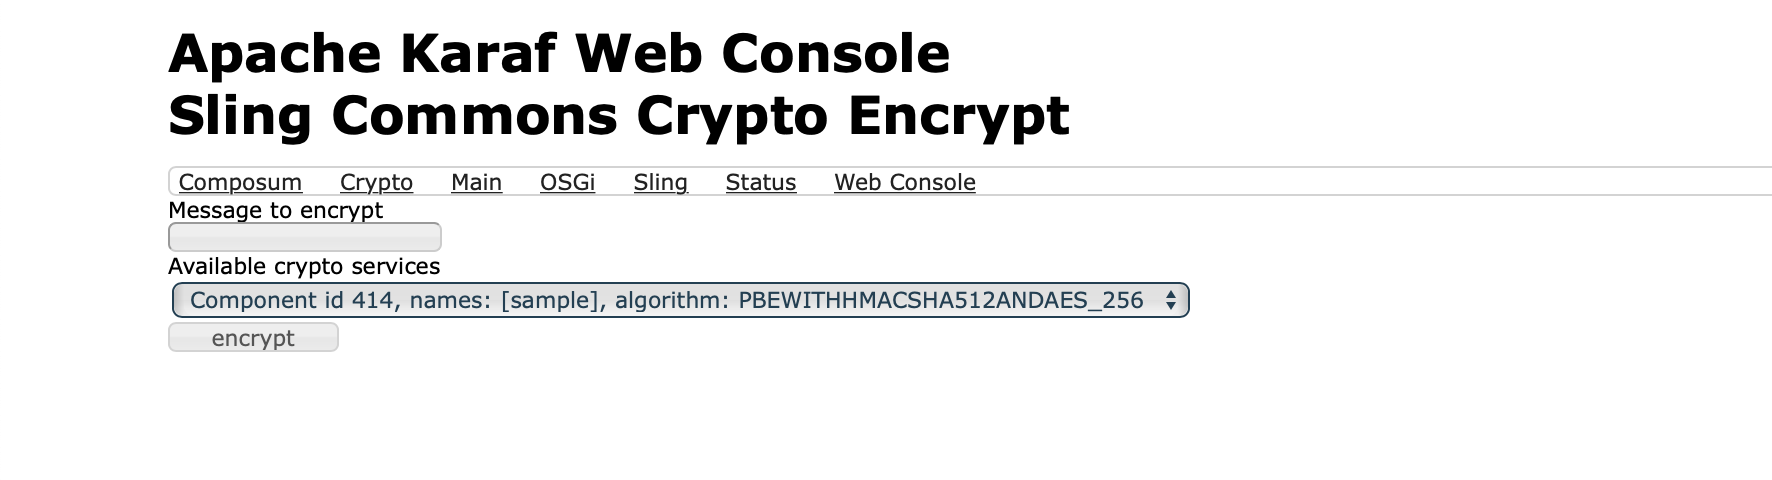 Sling Commons Crypto Encrypt Web Console Plugin